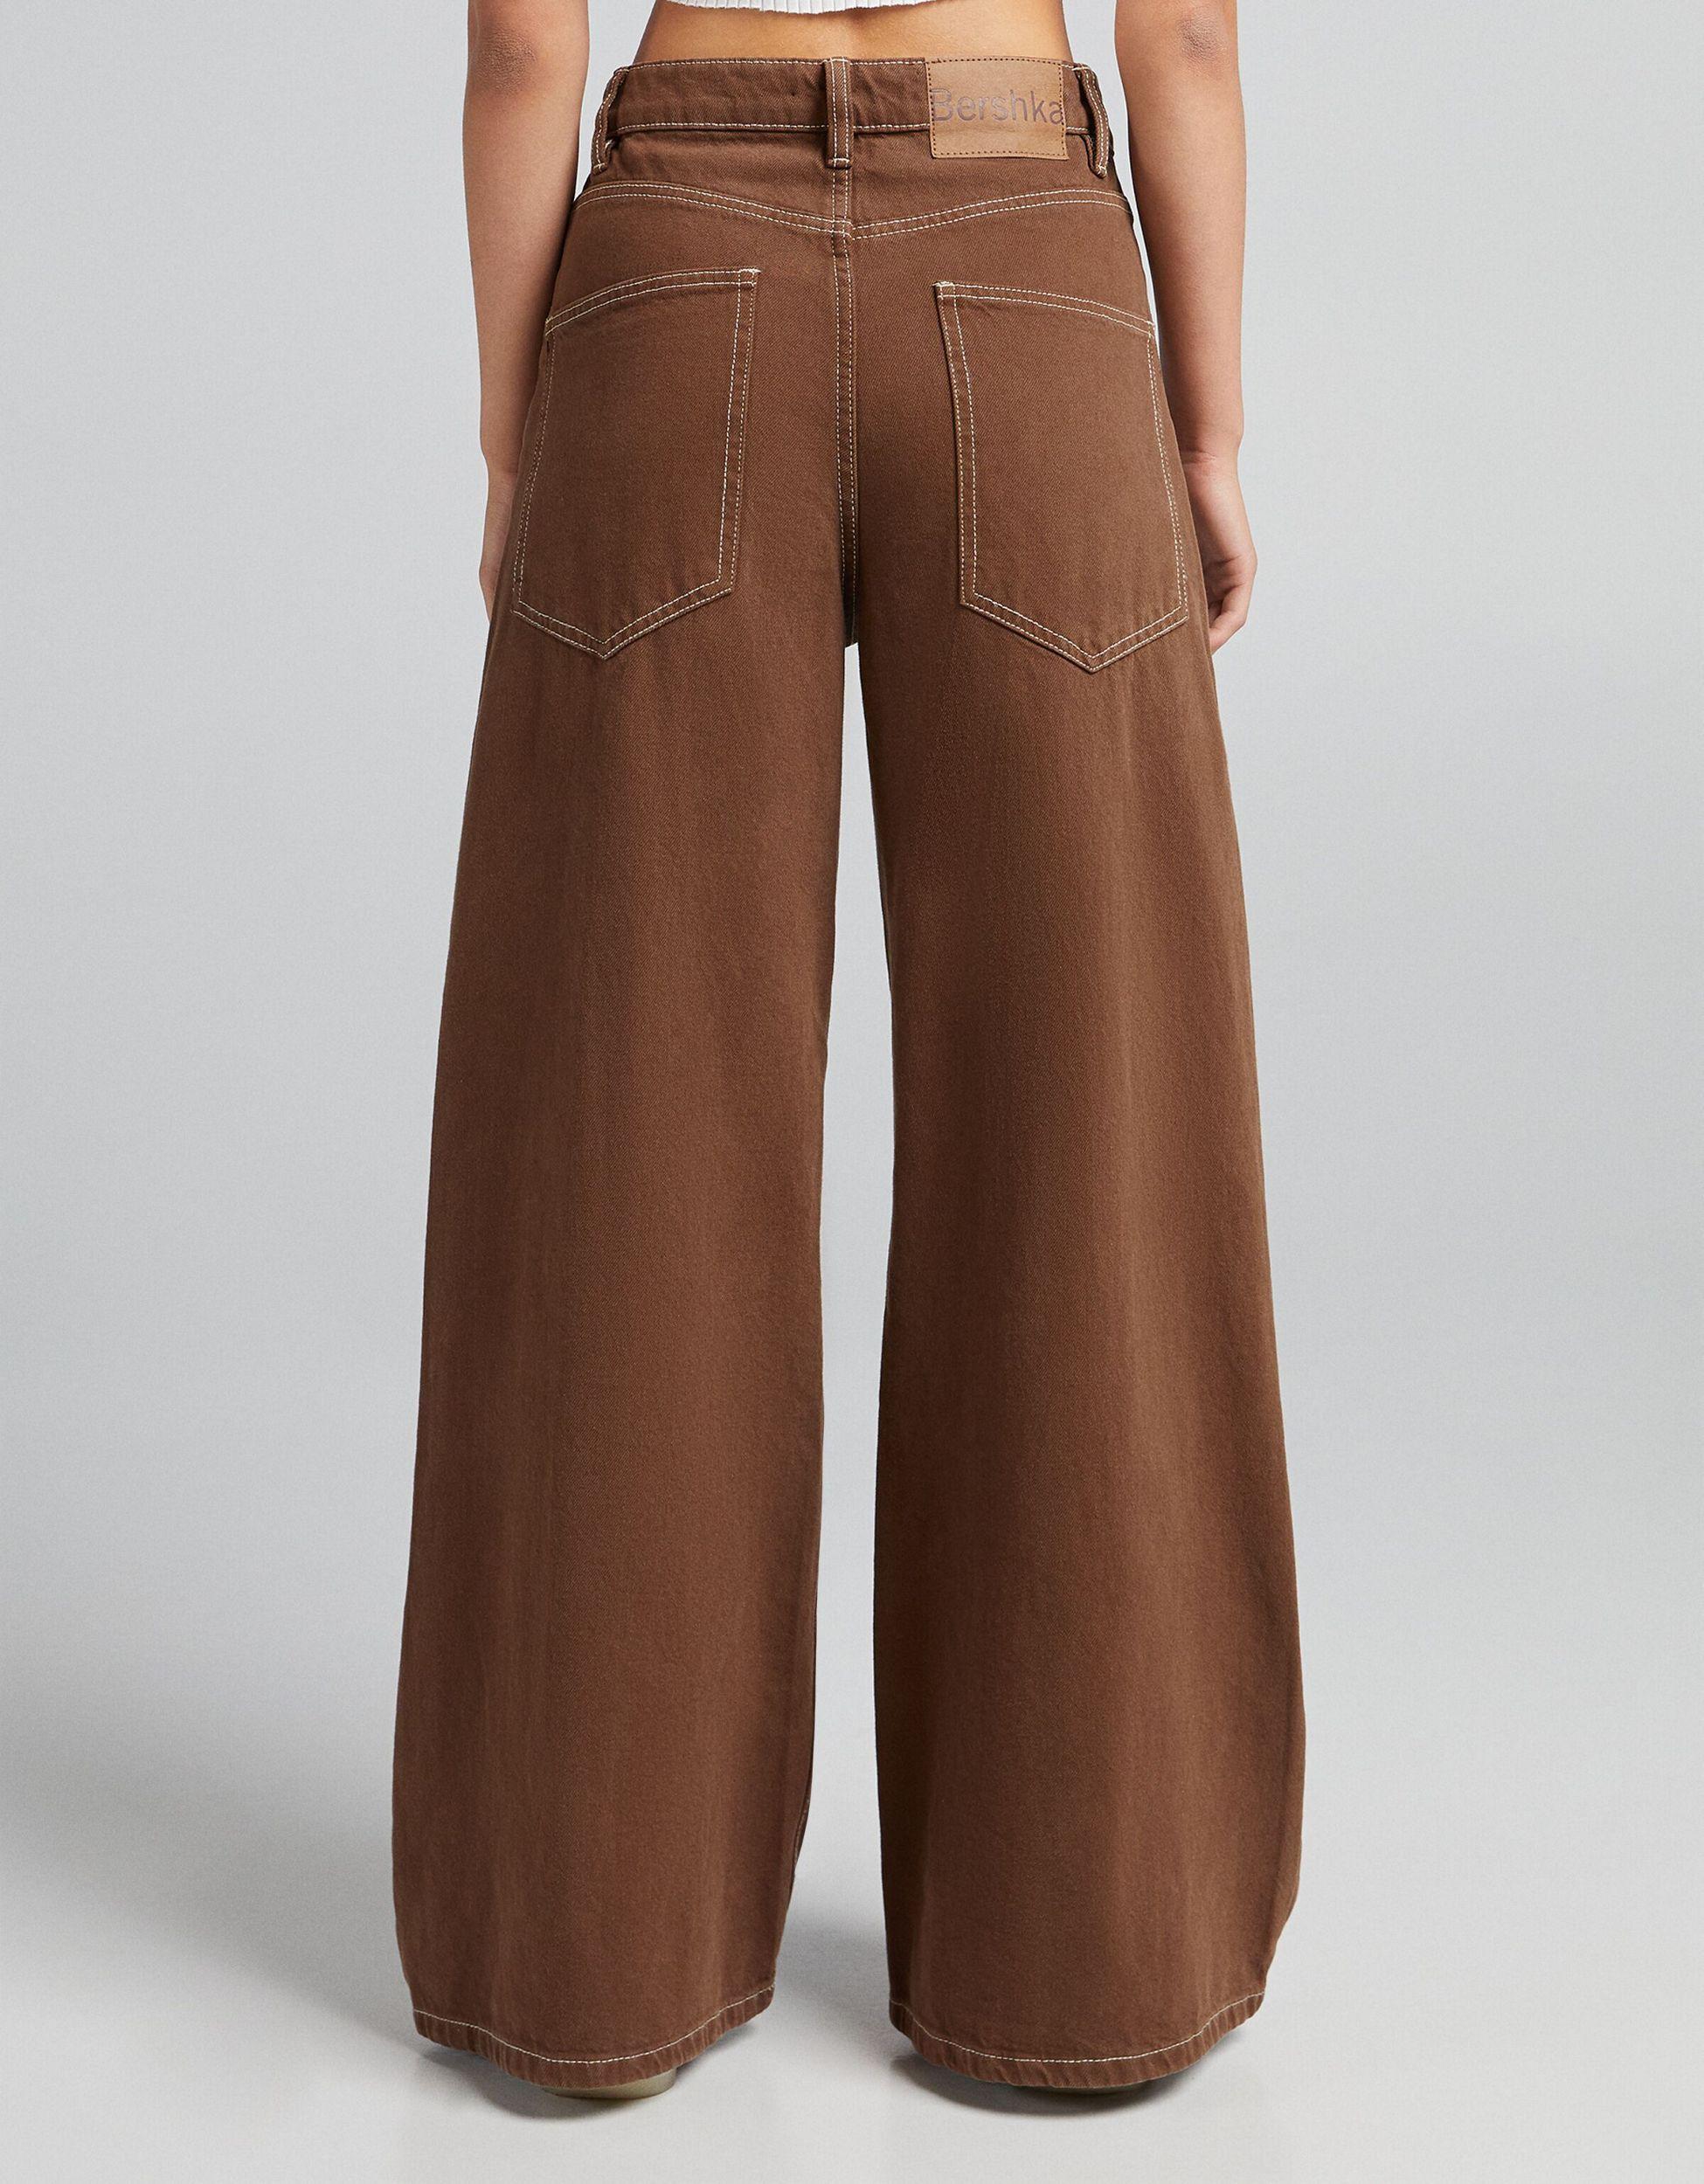 Bershka Wide Leg Trouser With Contrast Seam in Brown | Lyst